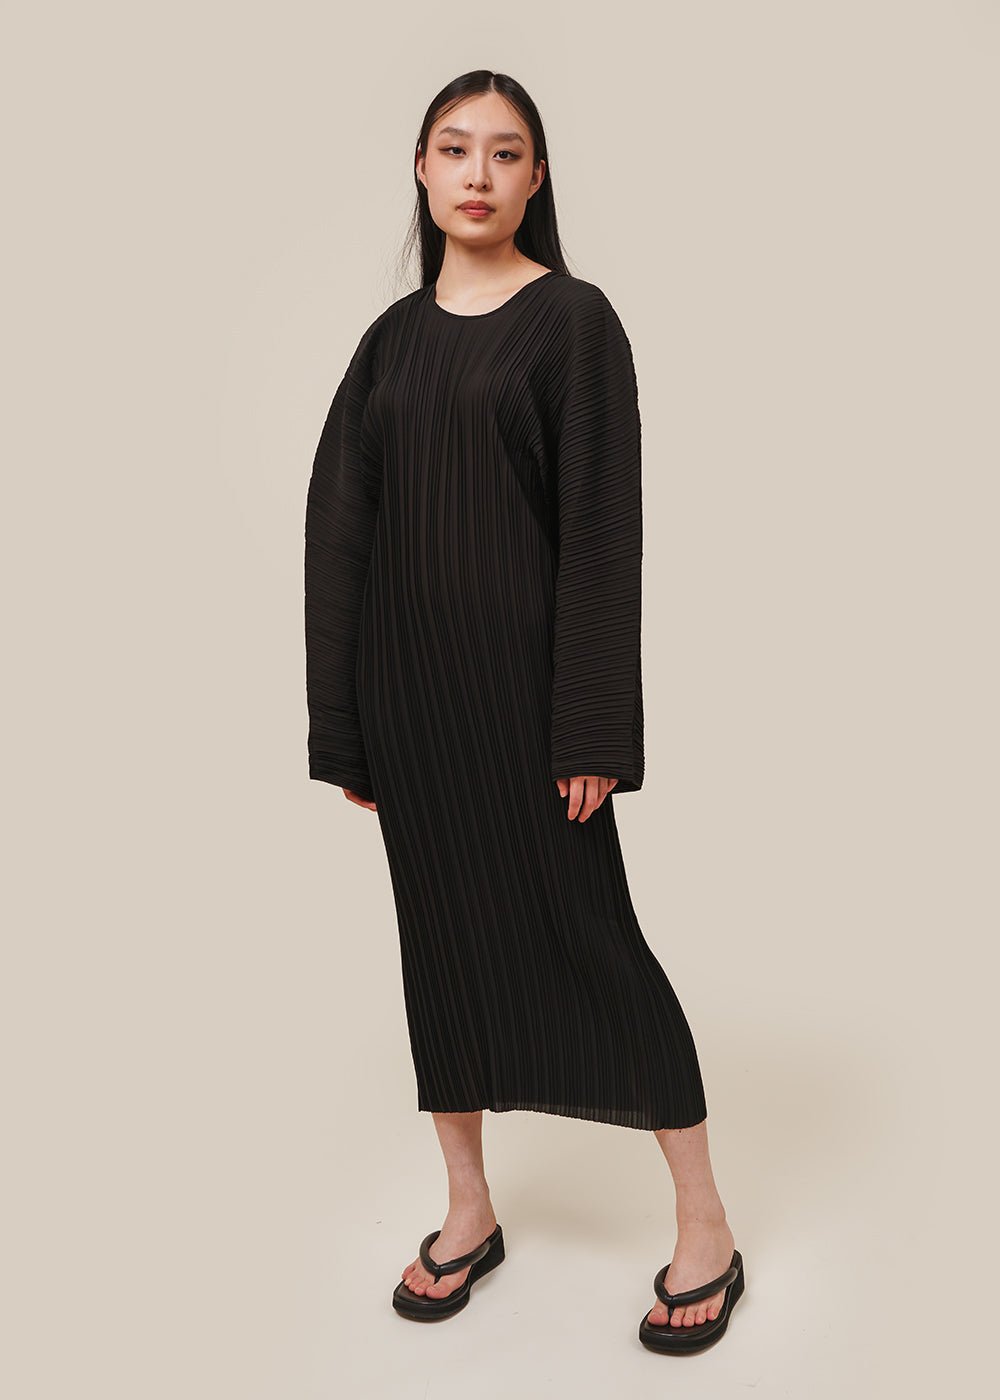 Stylein Black Indo Dress - New Classics Studios Sustainable Ethical Fashion Canada